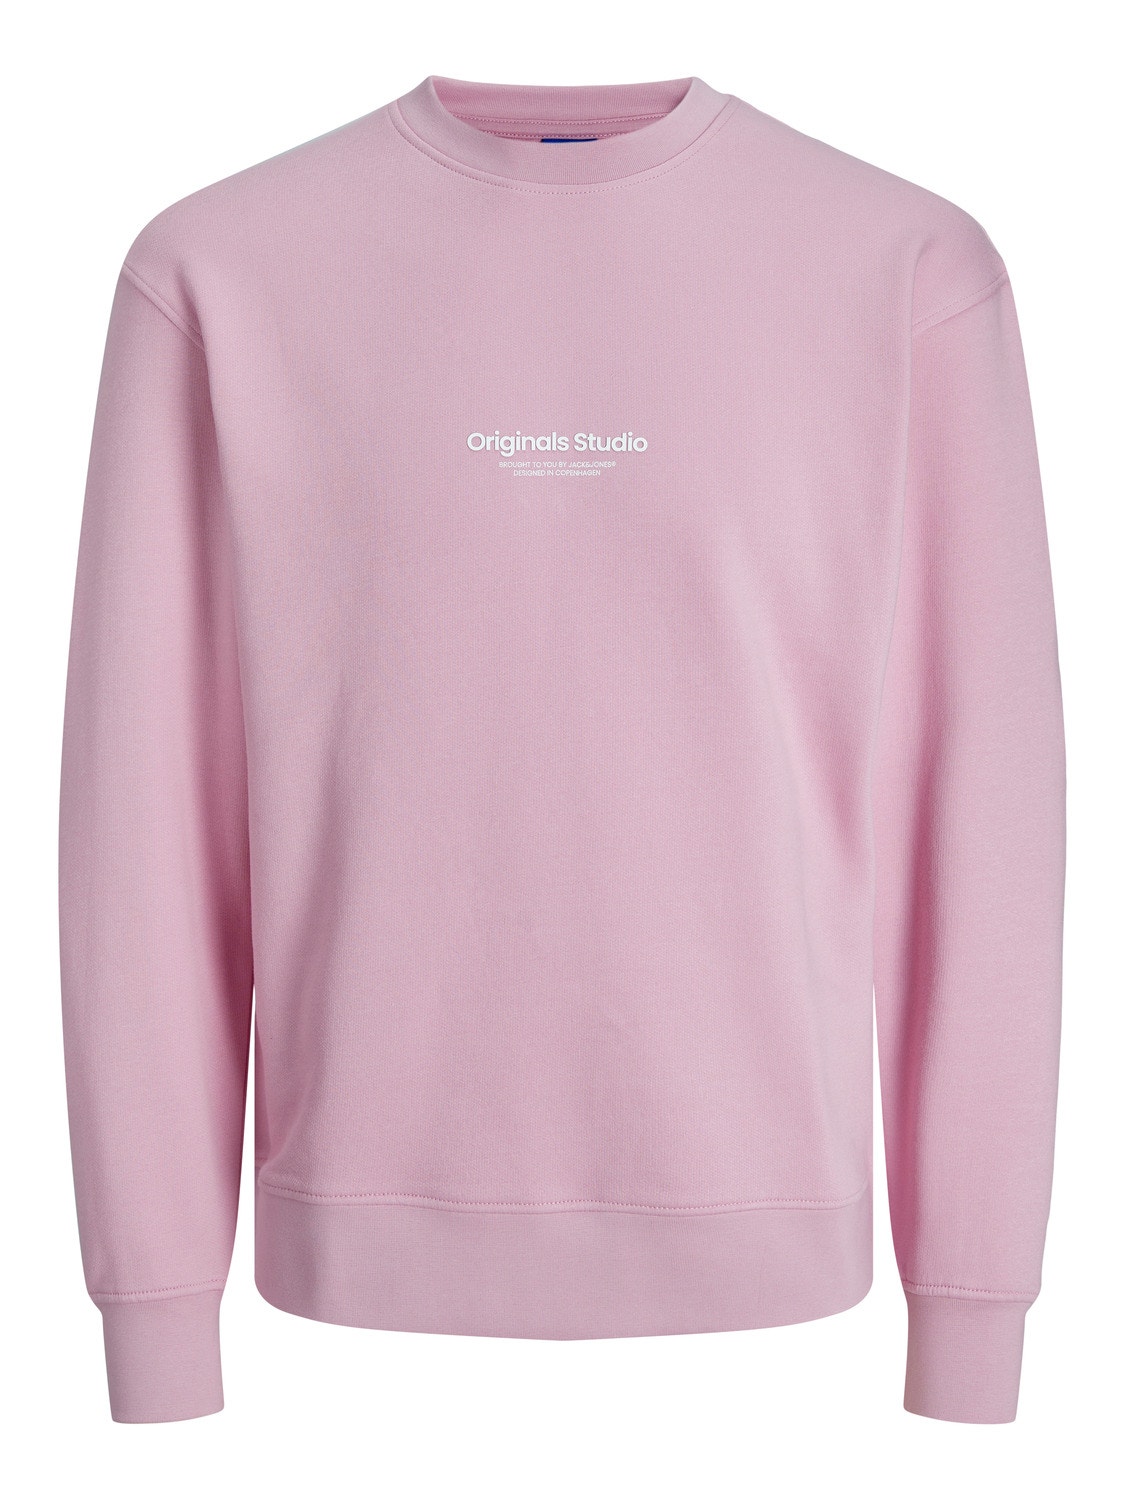 Jack & Jones Printed Crewn Neck Sweatshirt -Pink Nectar - 12241694